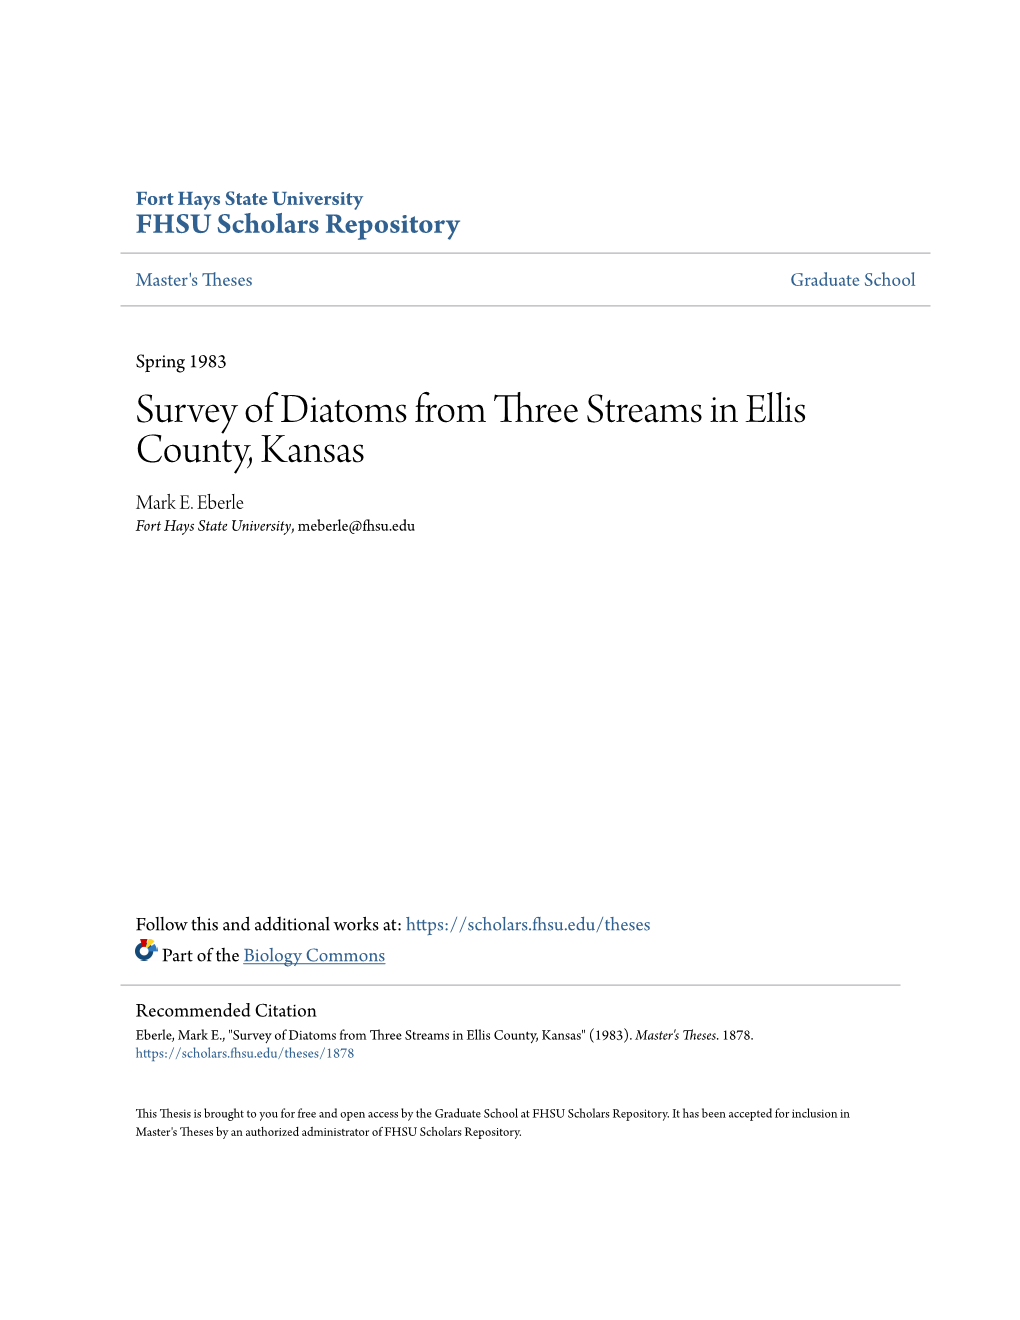 Survey of Diatoms from Three Streams in Ellis County, Kansas Mark E